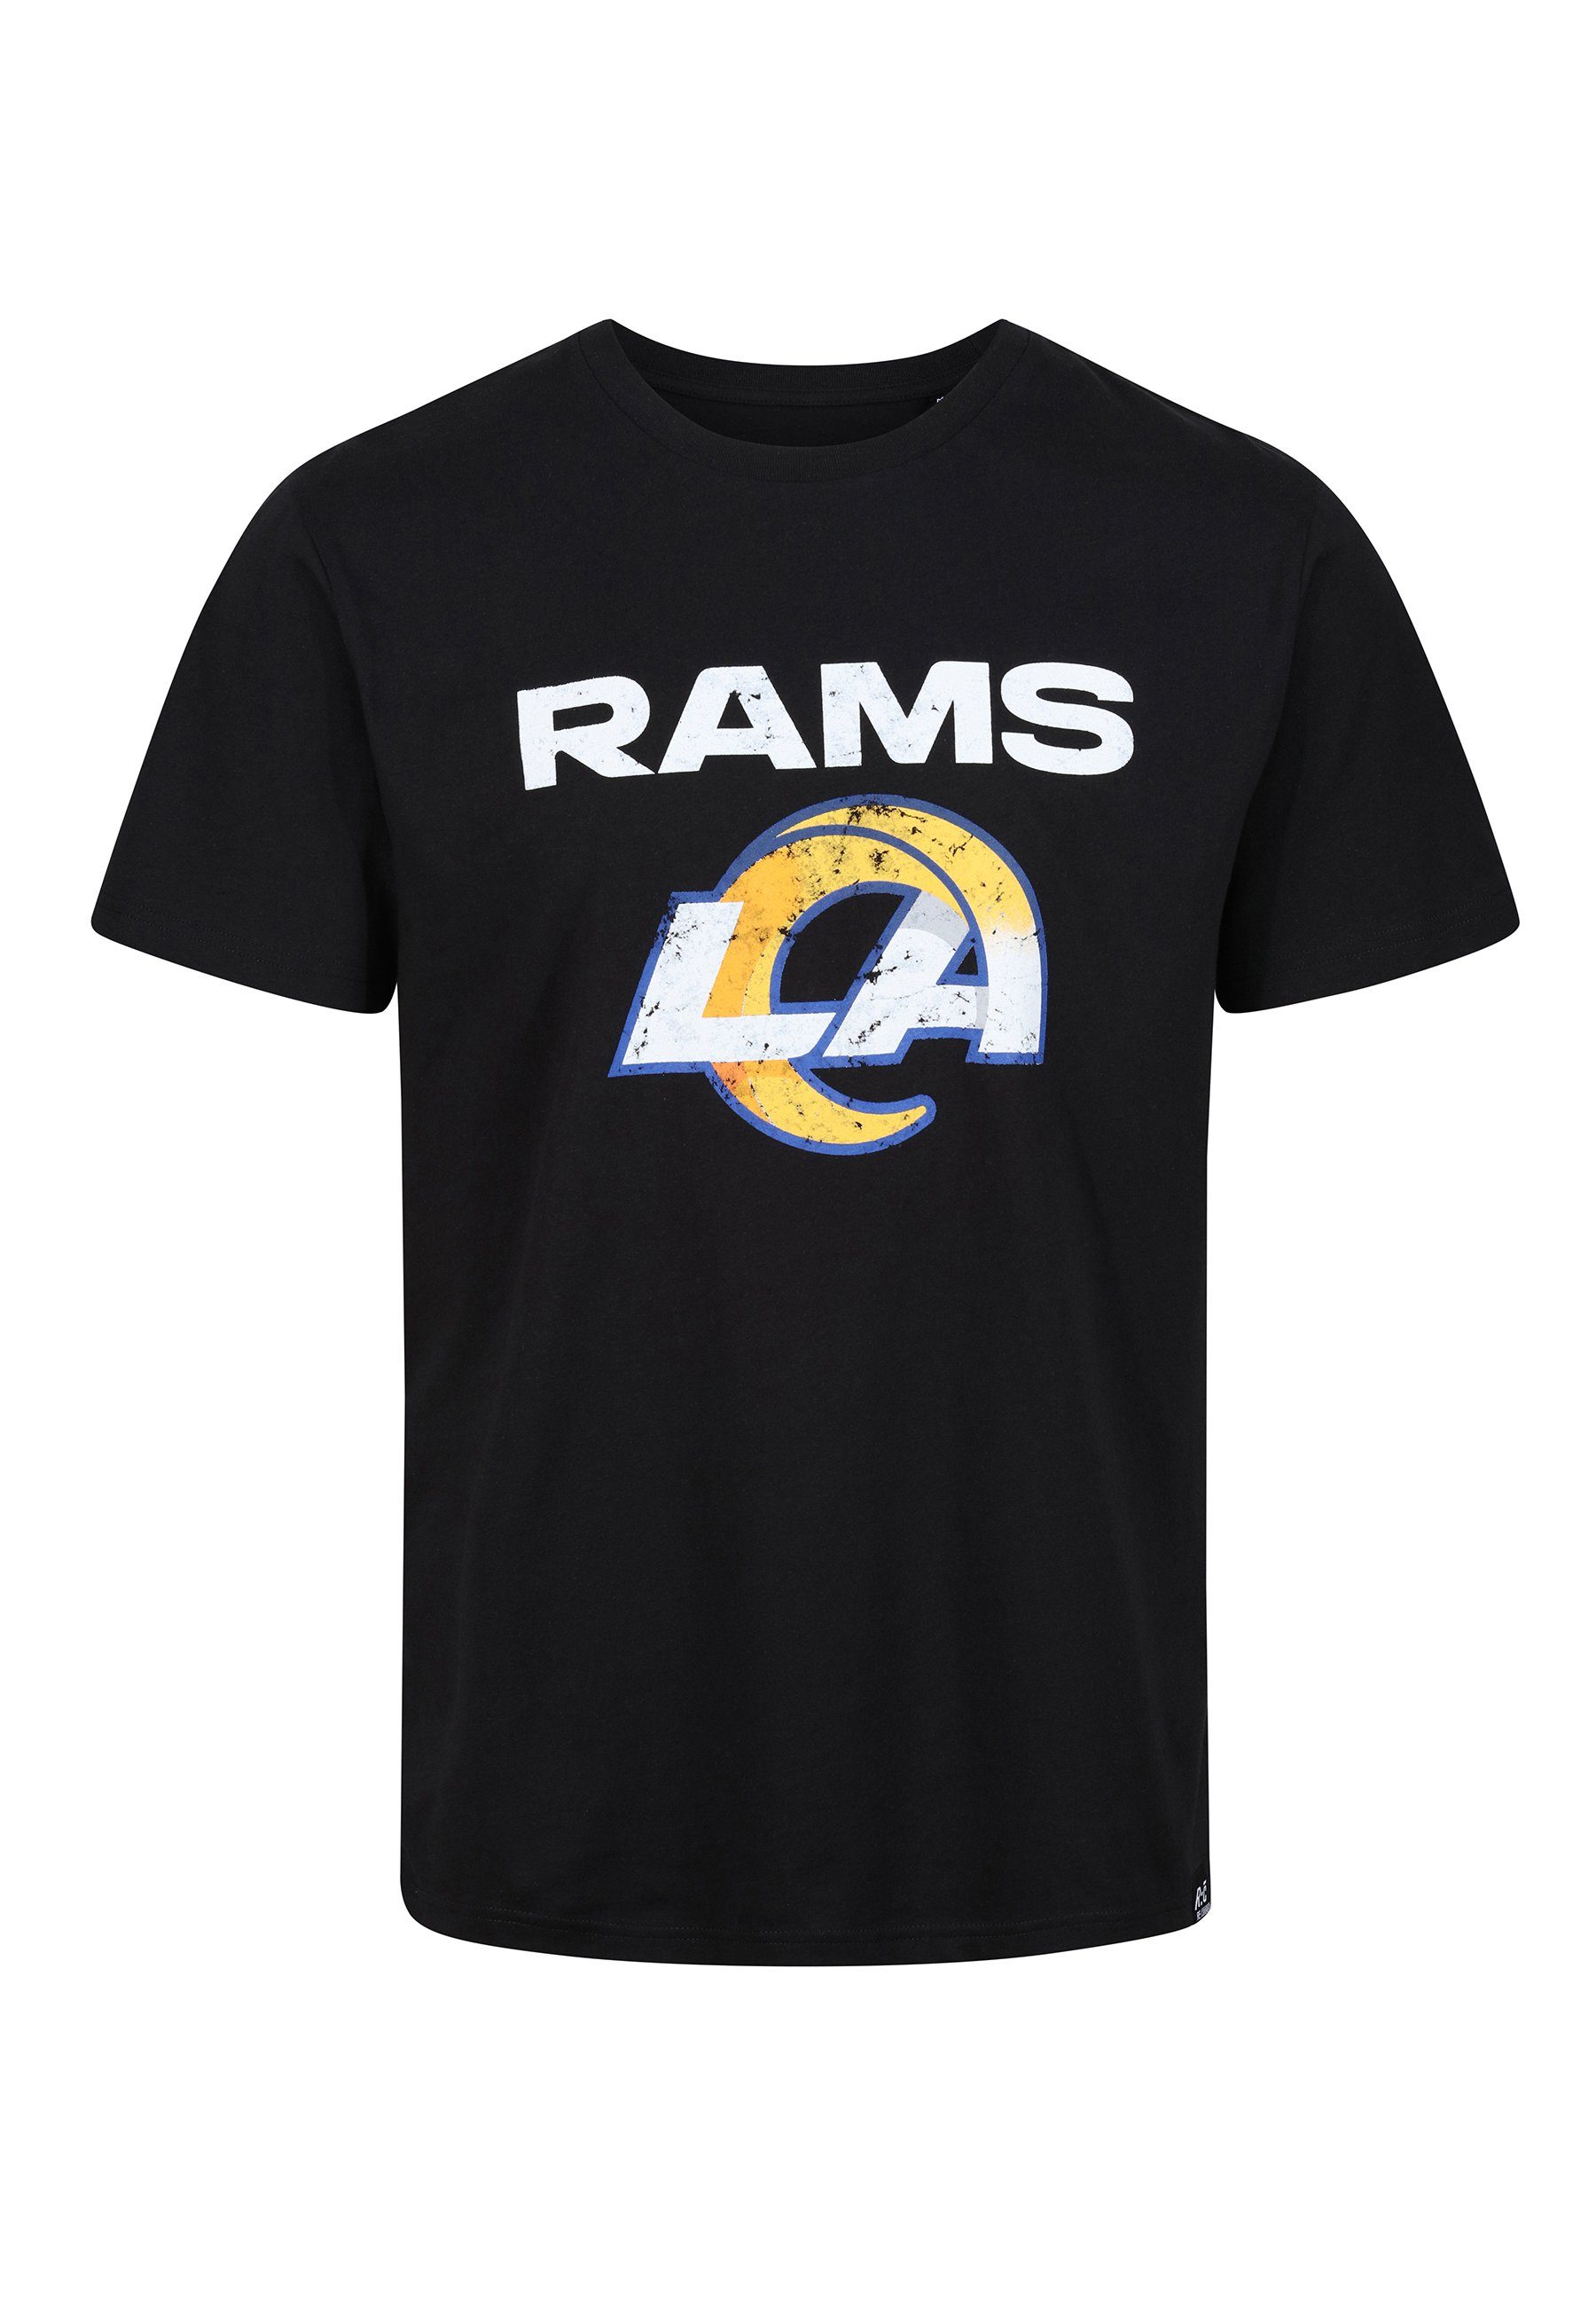 Recovered GOTS zertifizierte RAMS Bio-Baumwolle LOGO NFL T-Shirt